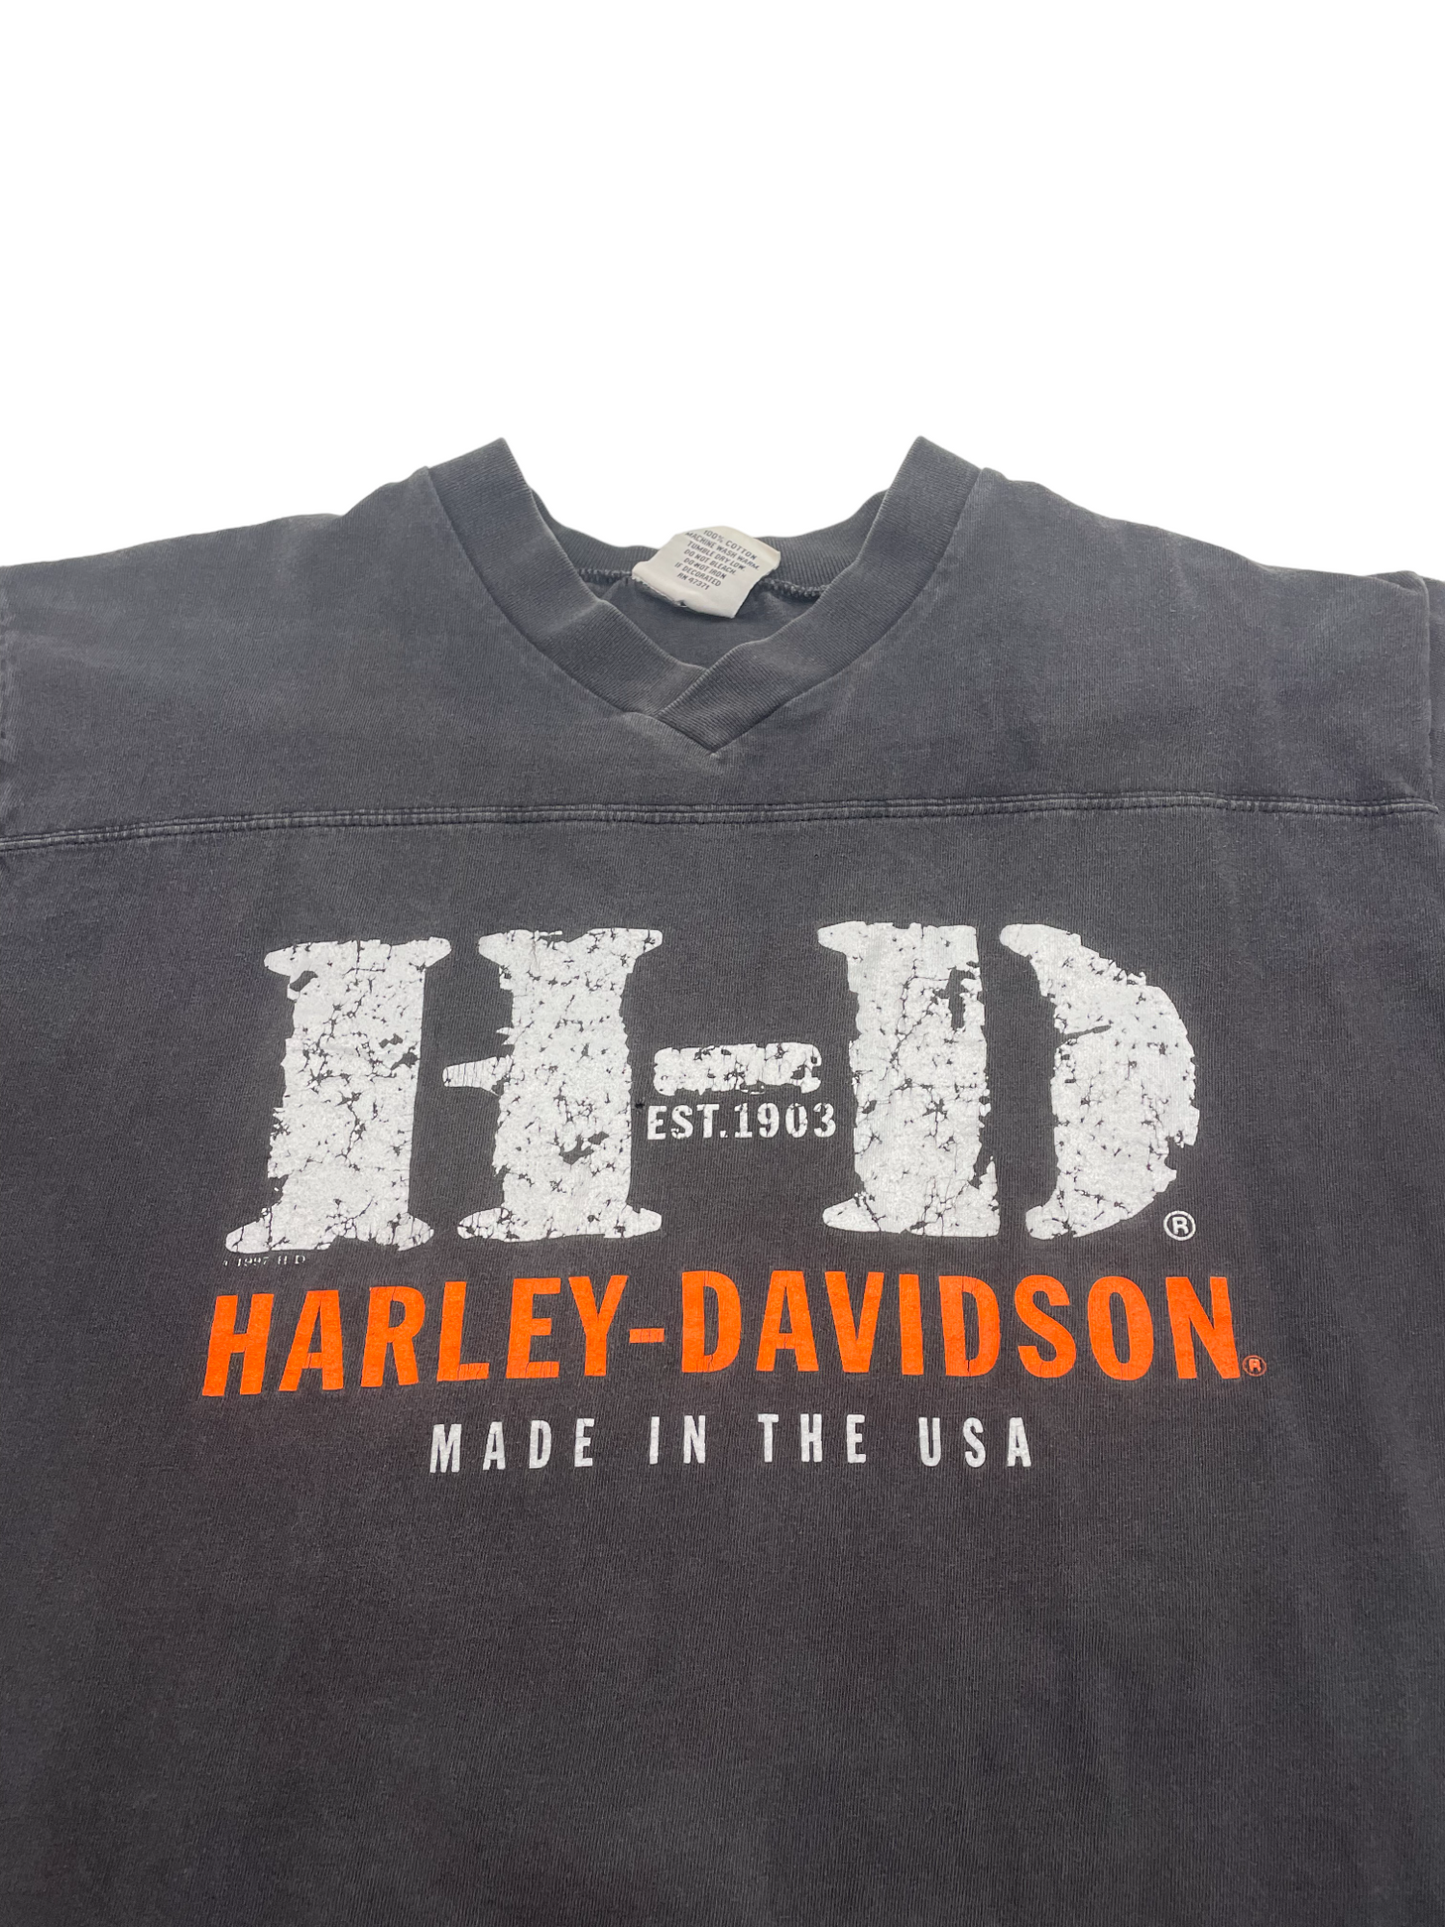 Harley Davidson Tee V-Neck